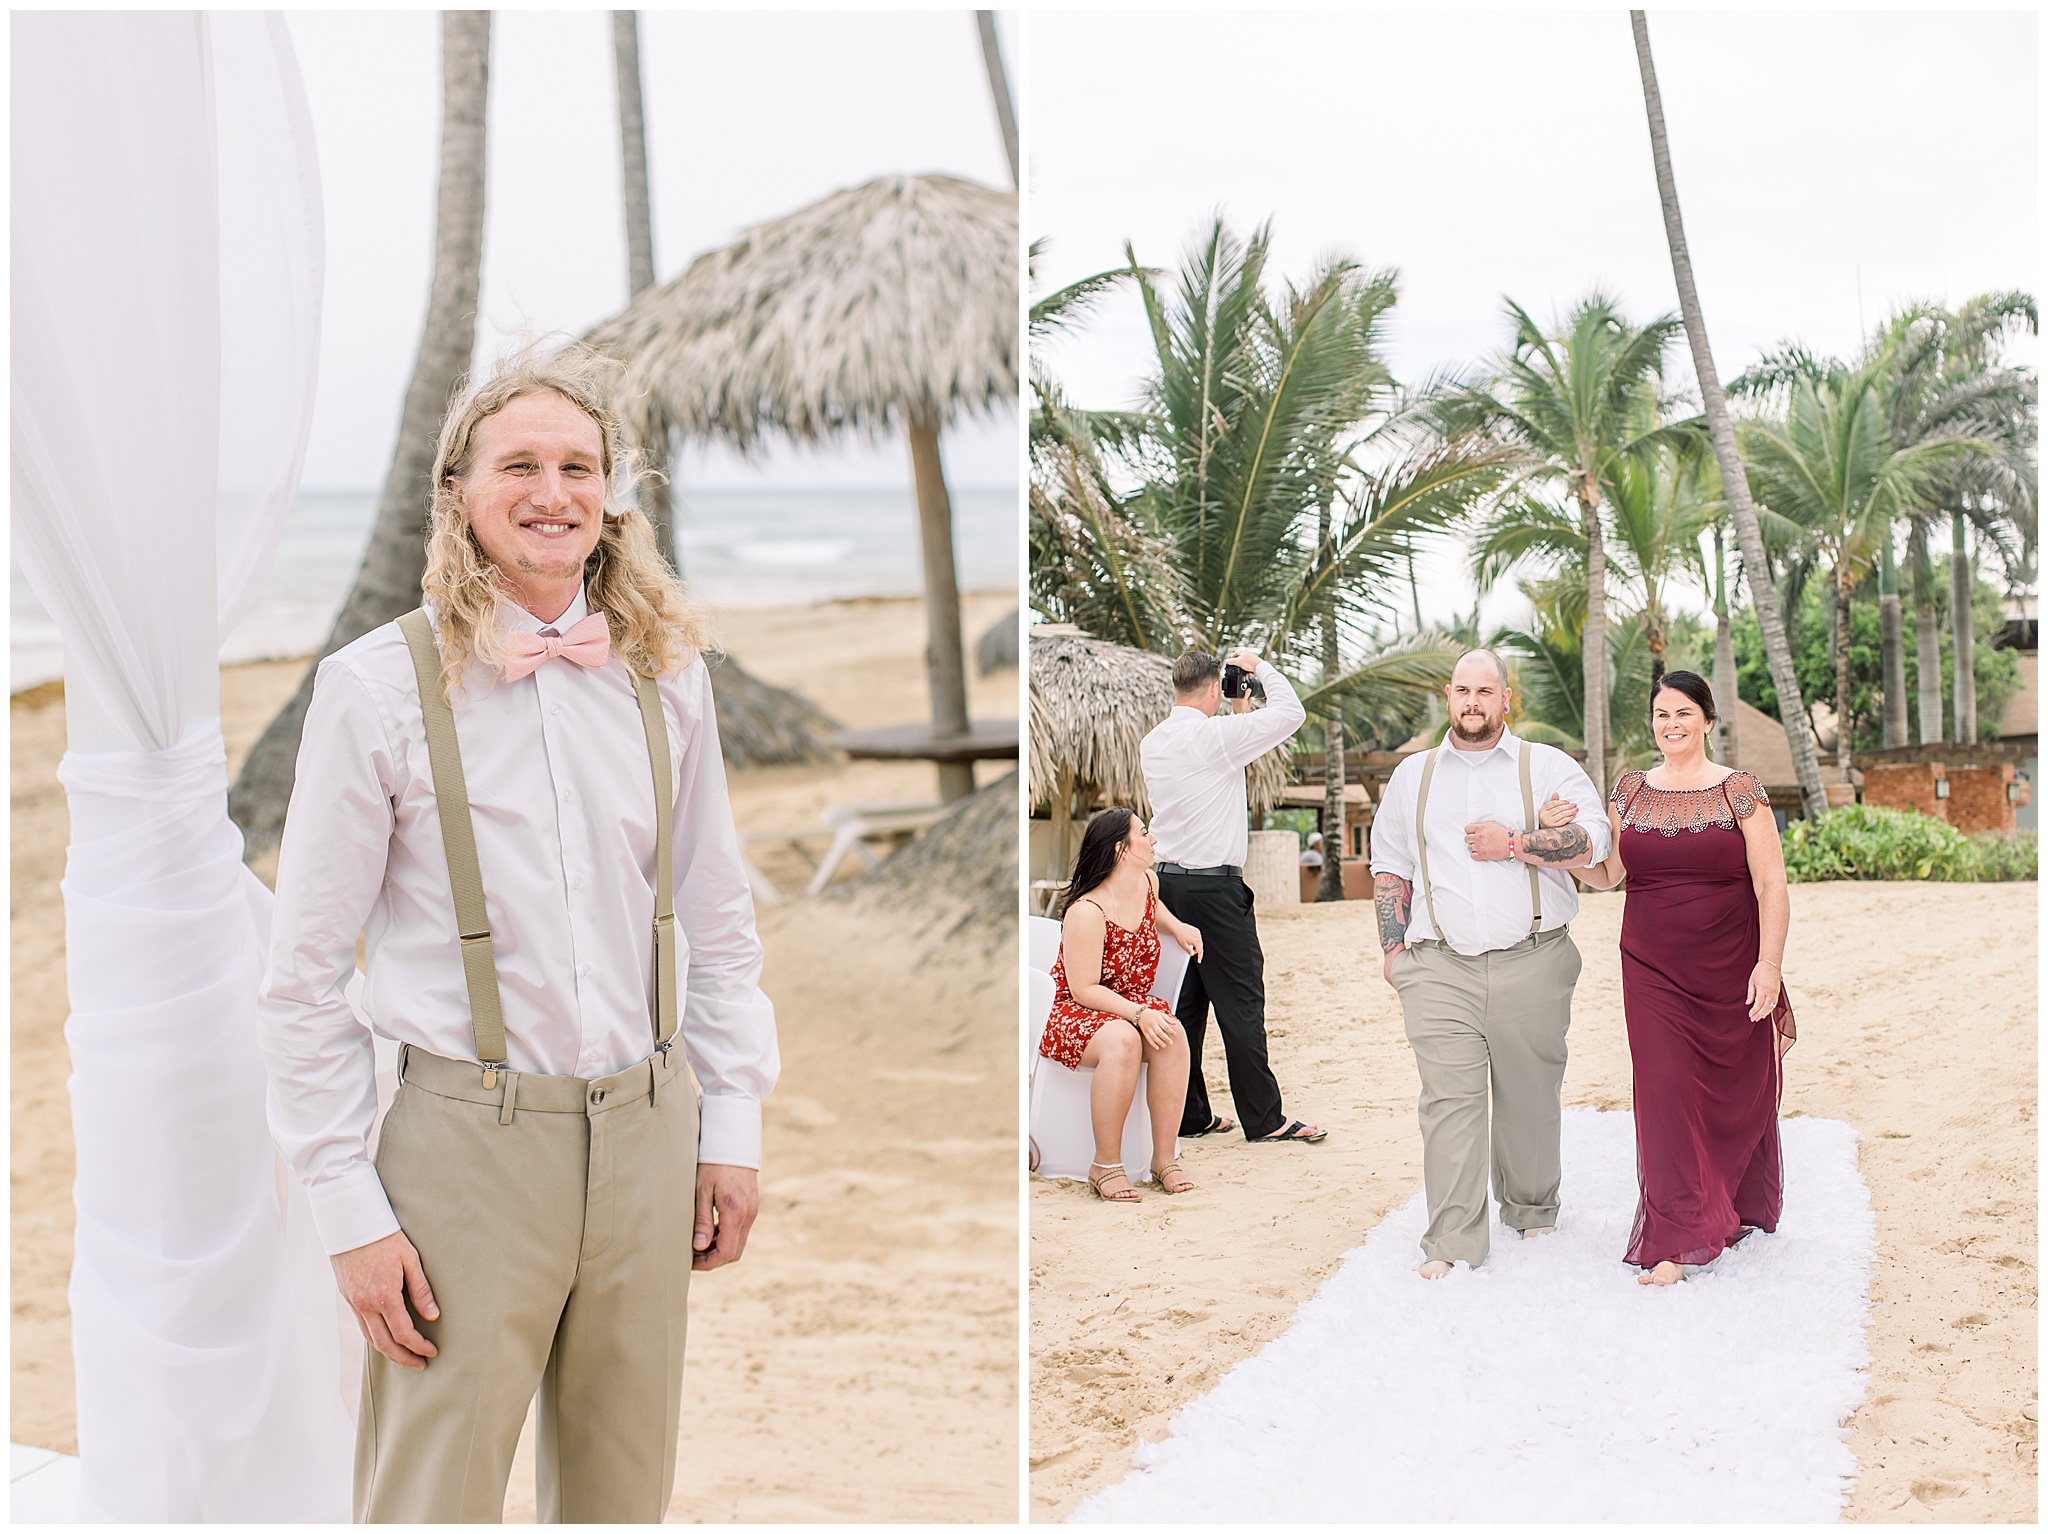 Dreams Punta Cana Beach Wedding Ceremony